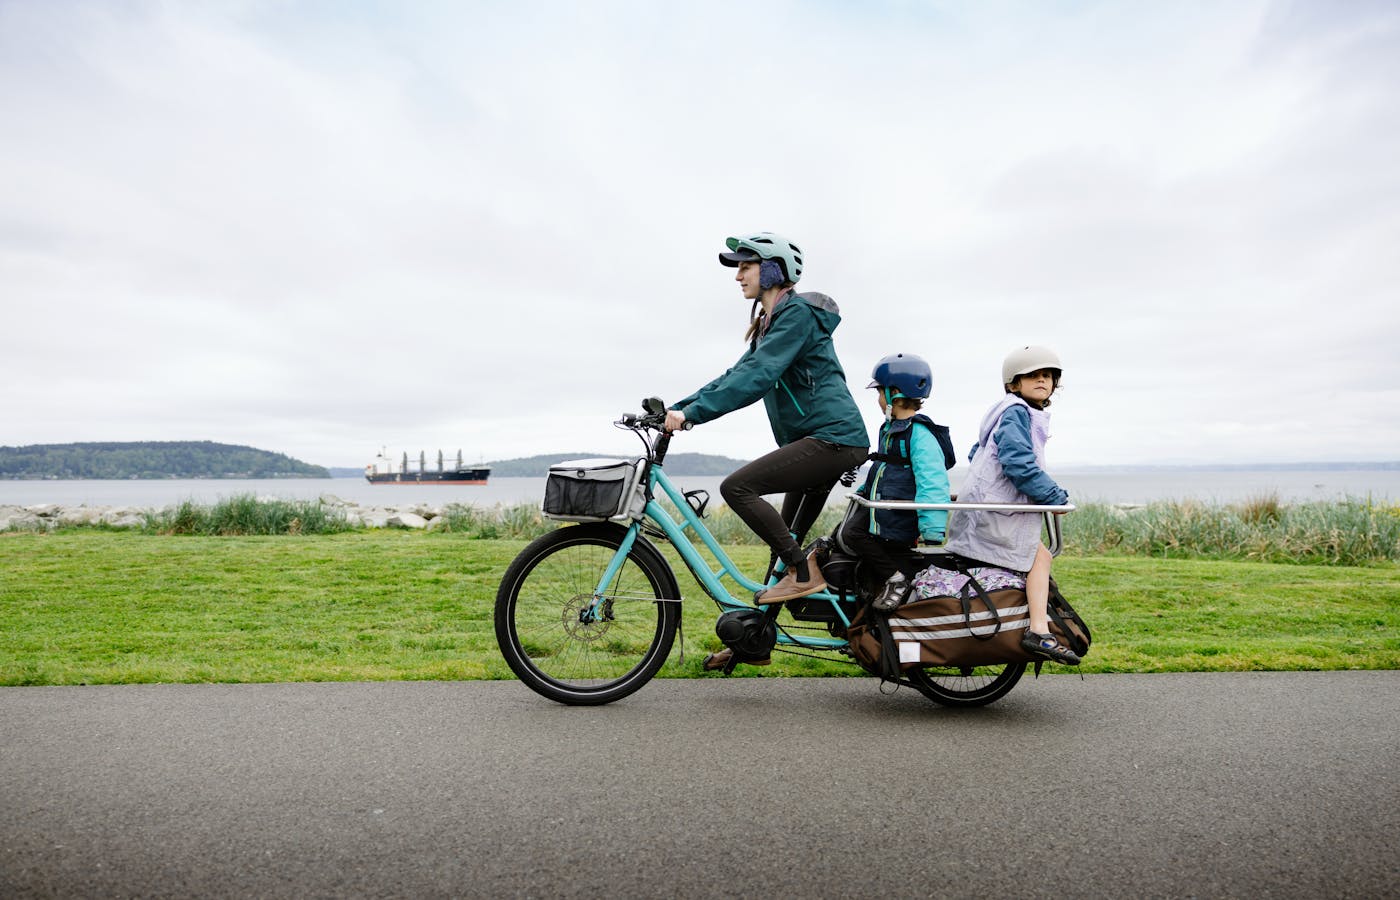 Smart eBike Ride: Electric Bike The Best Vehicle Smart Makes?